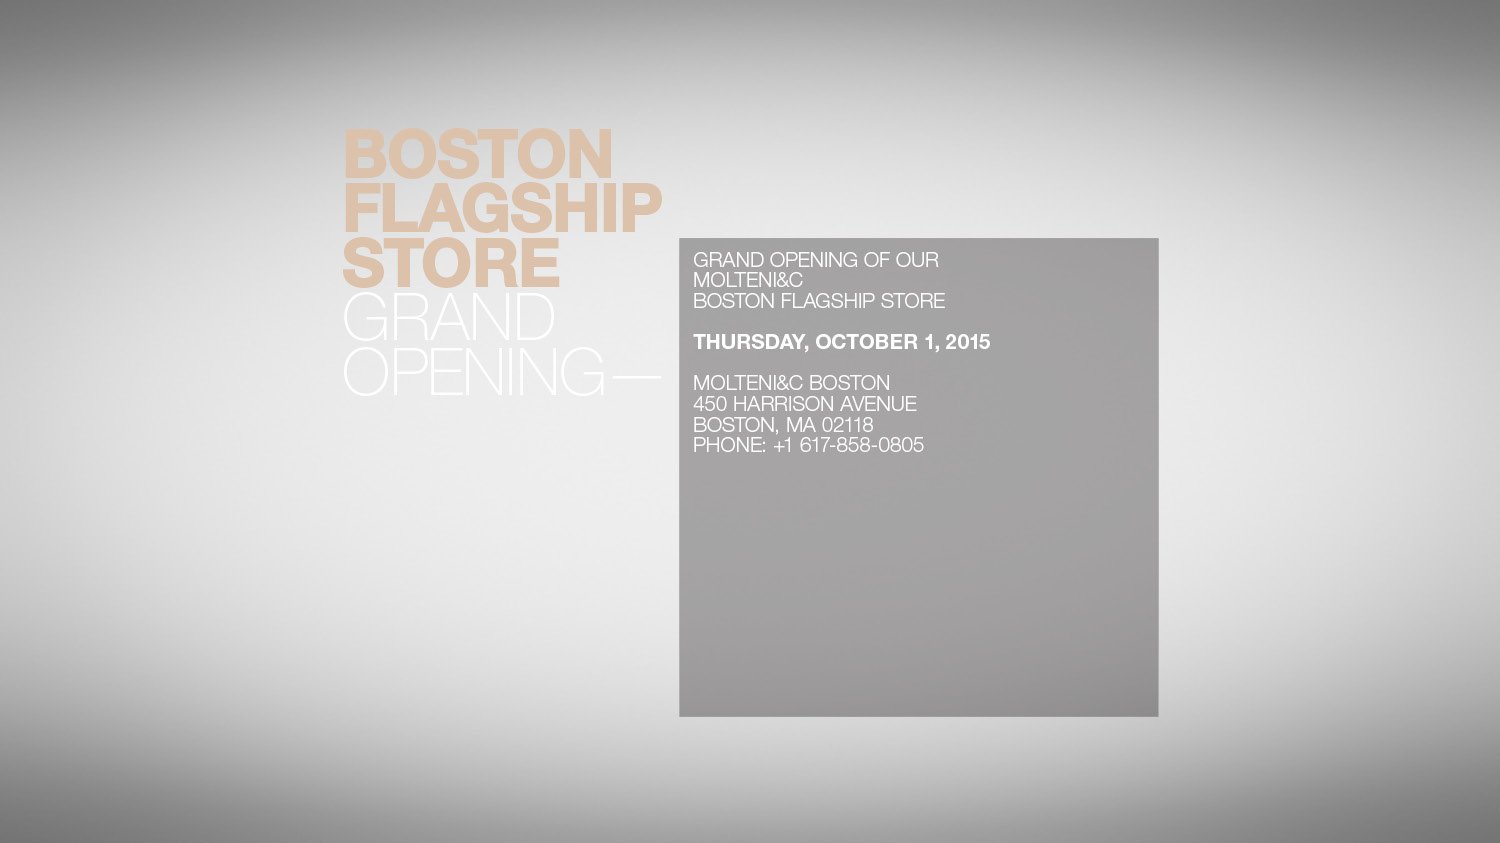 Molteni&C Boston flagship store grand opening